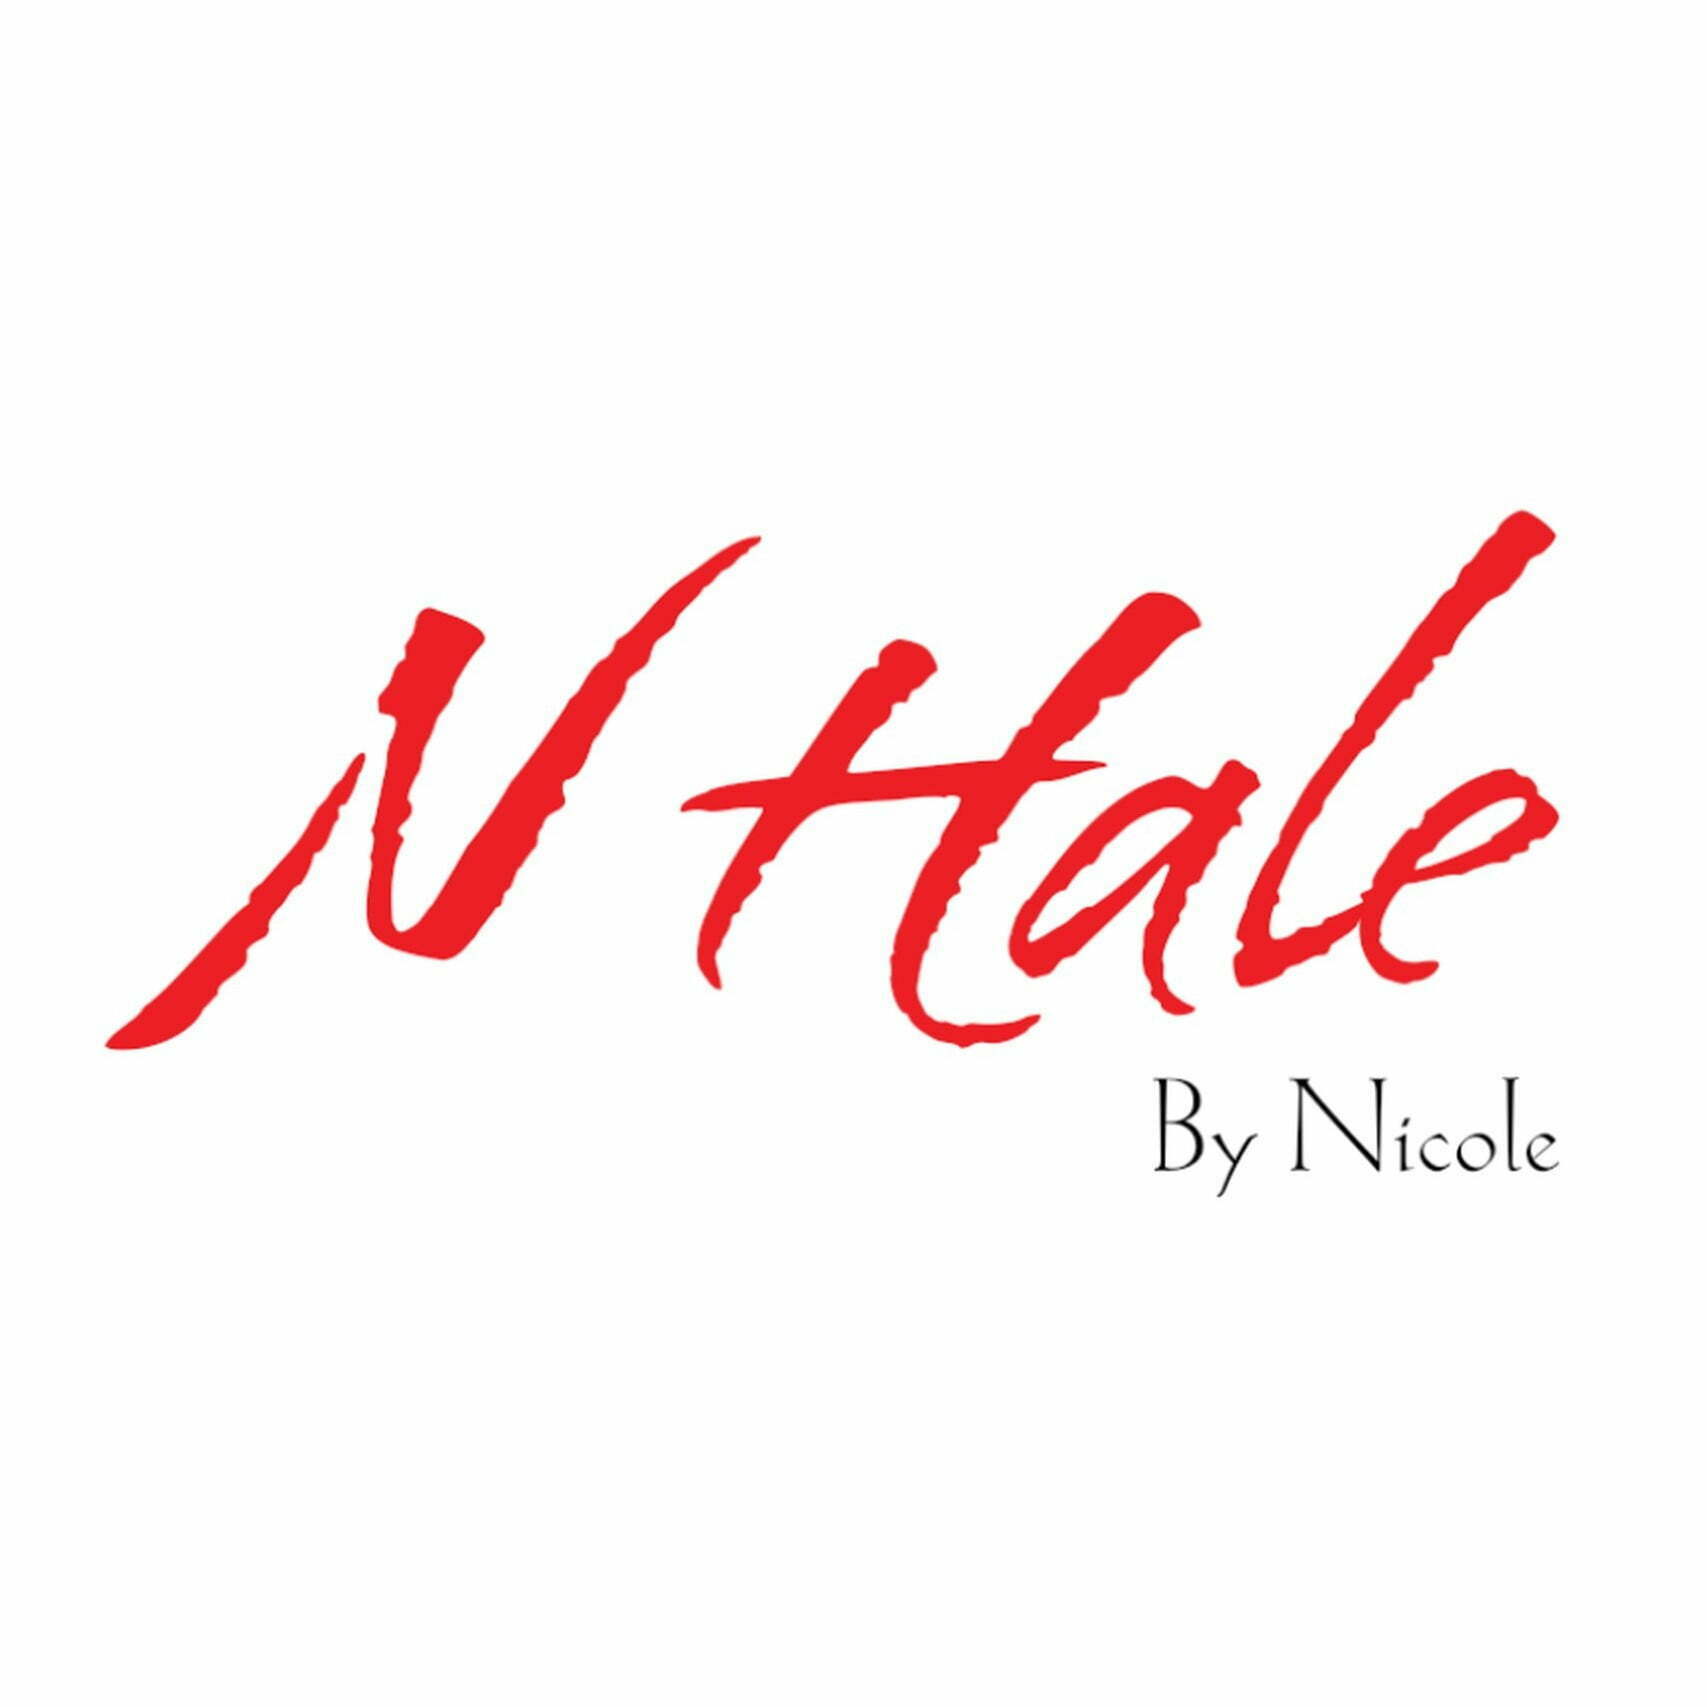 N Hale by Nicole square